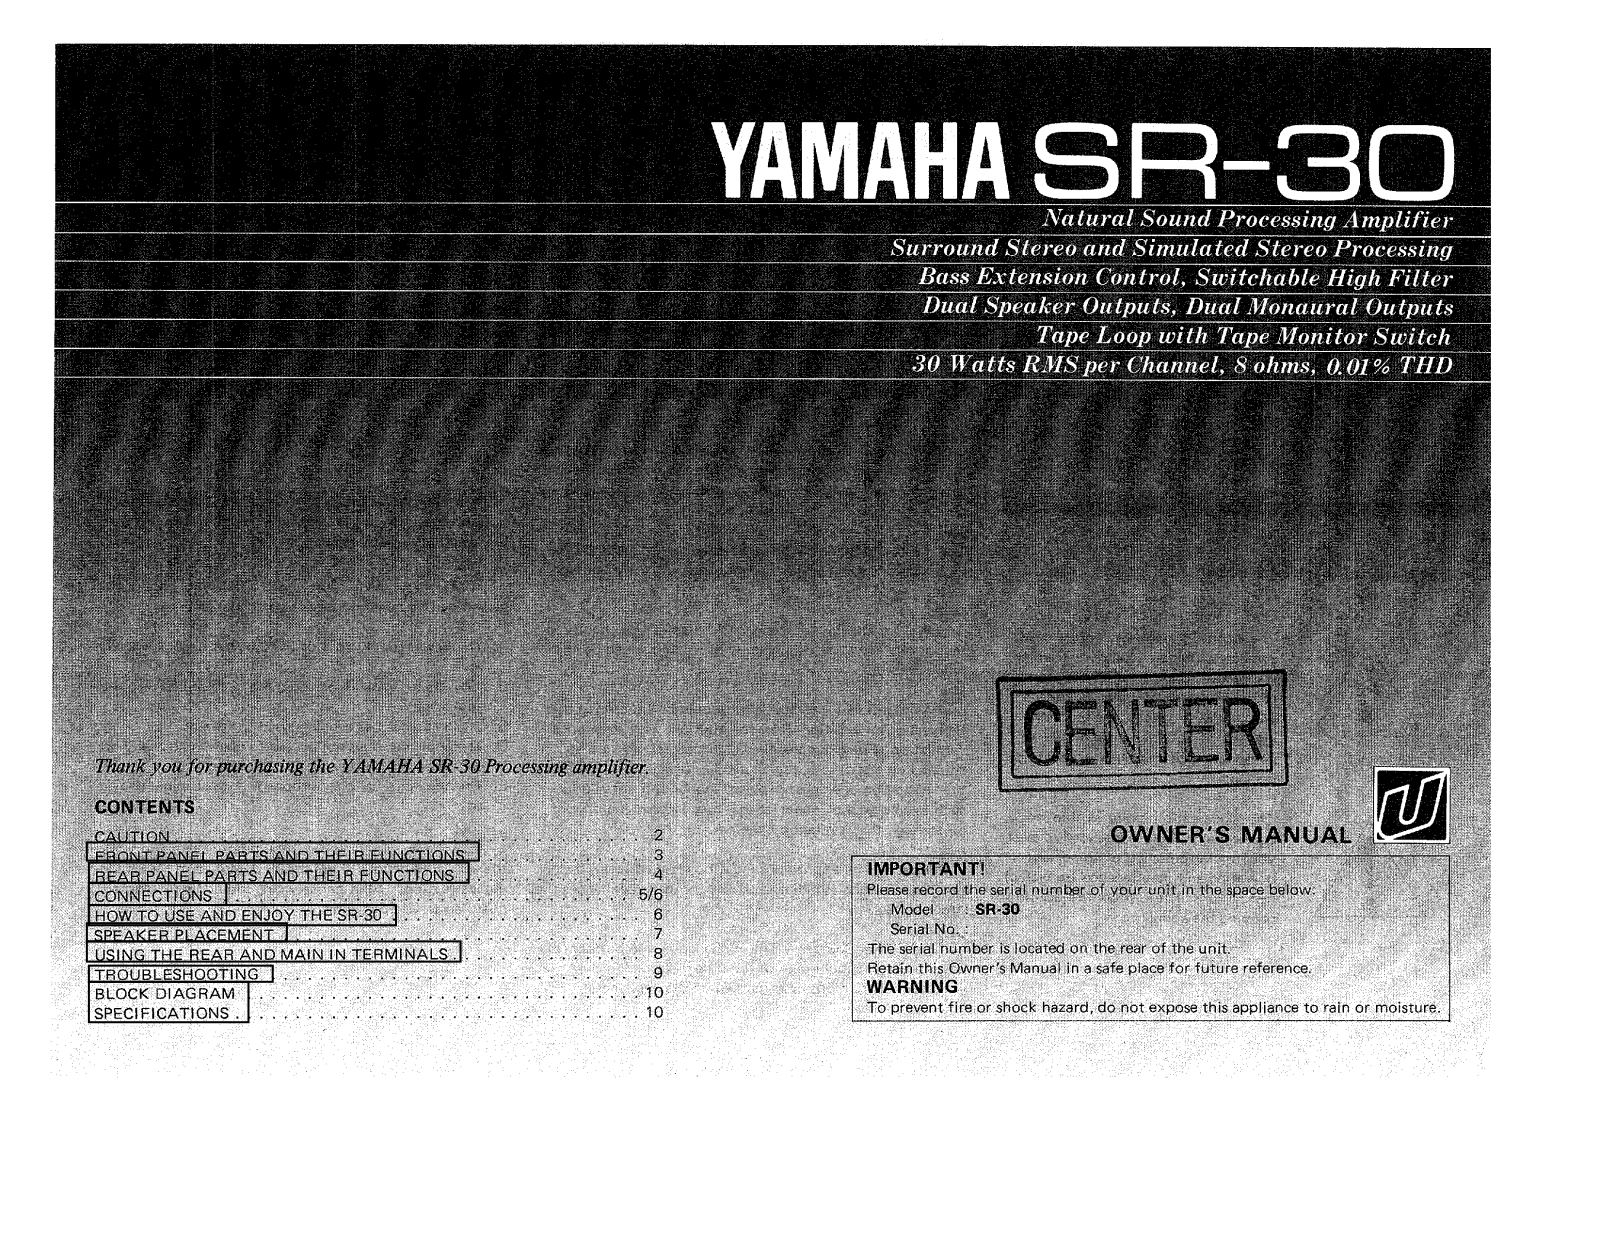 Yamaha SR-30 Owners manual